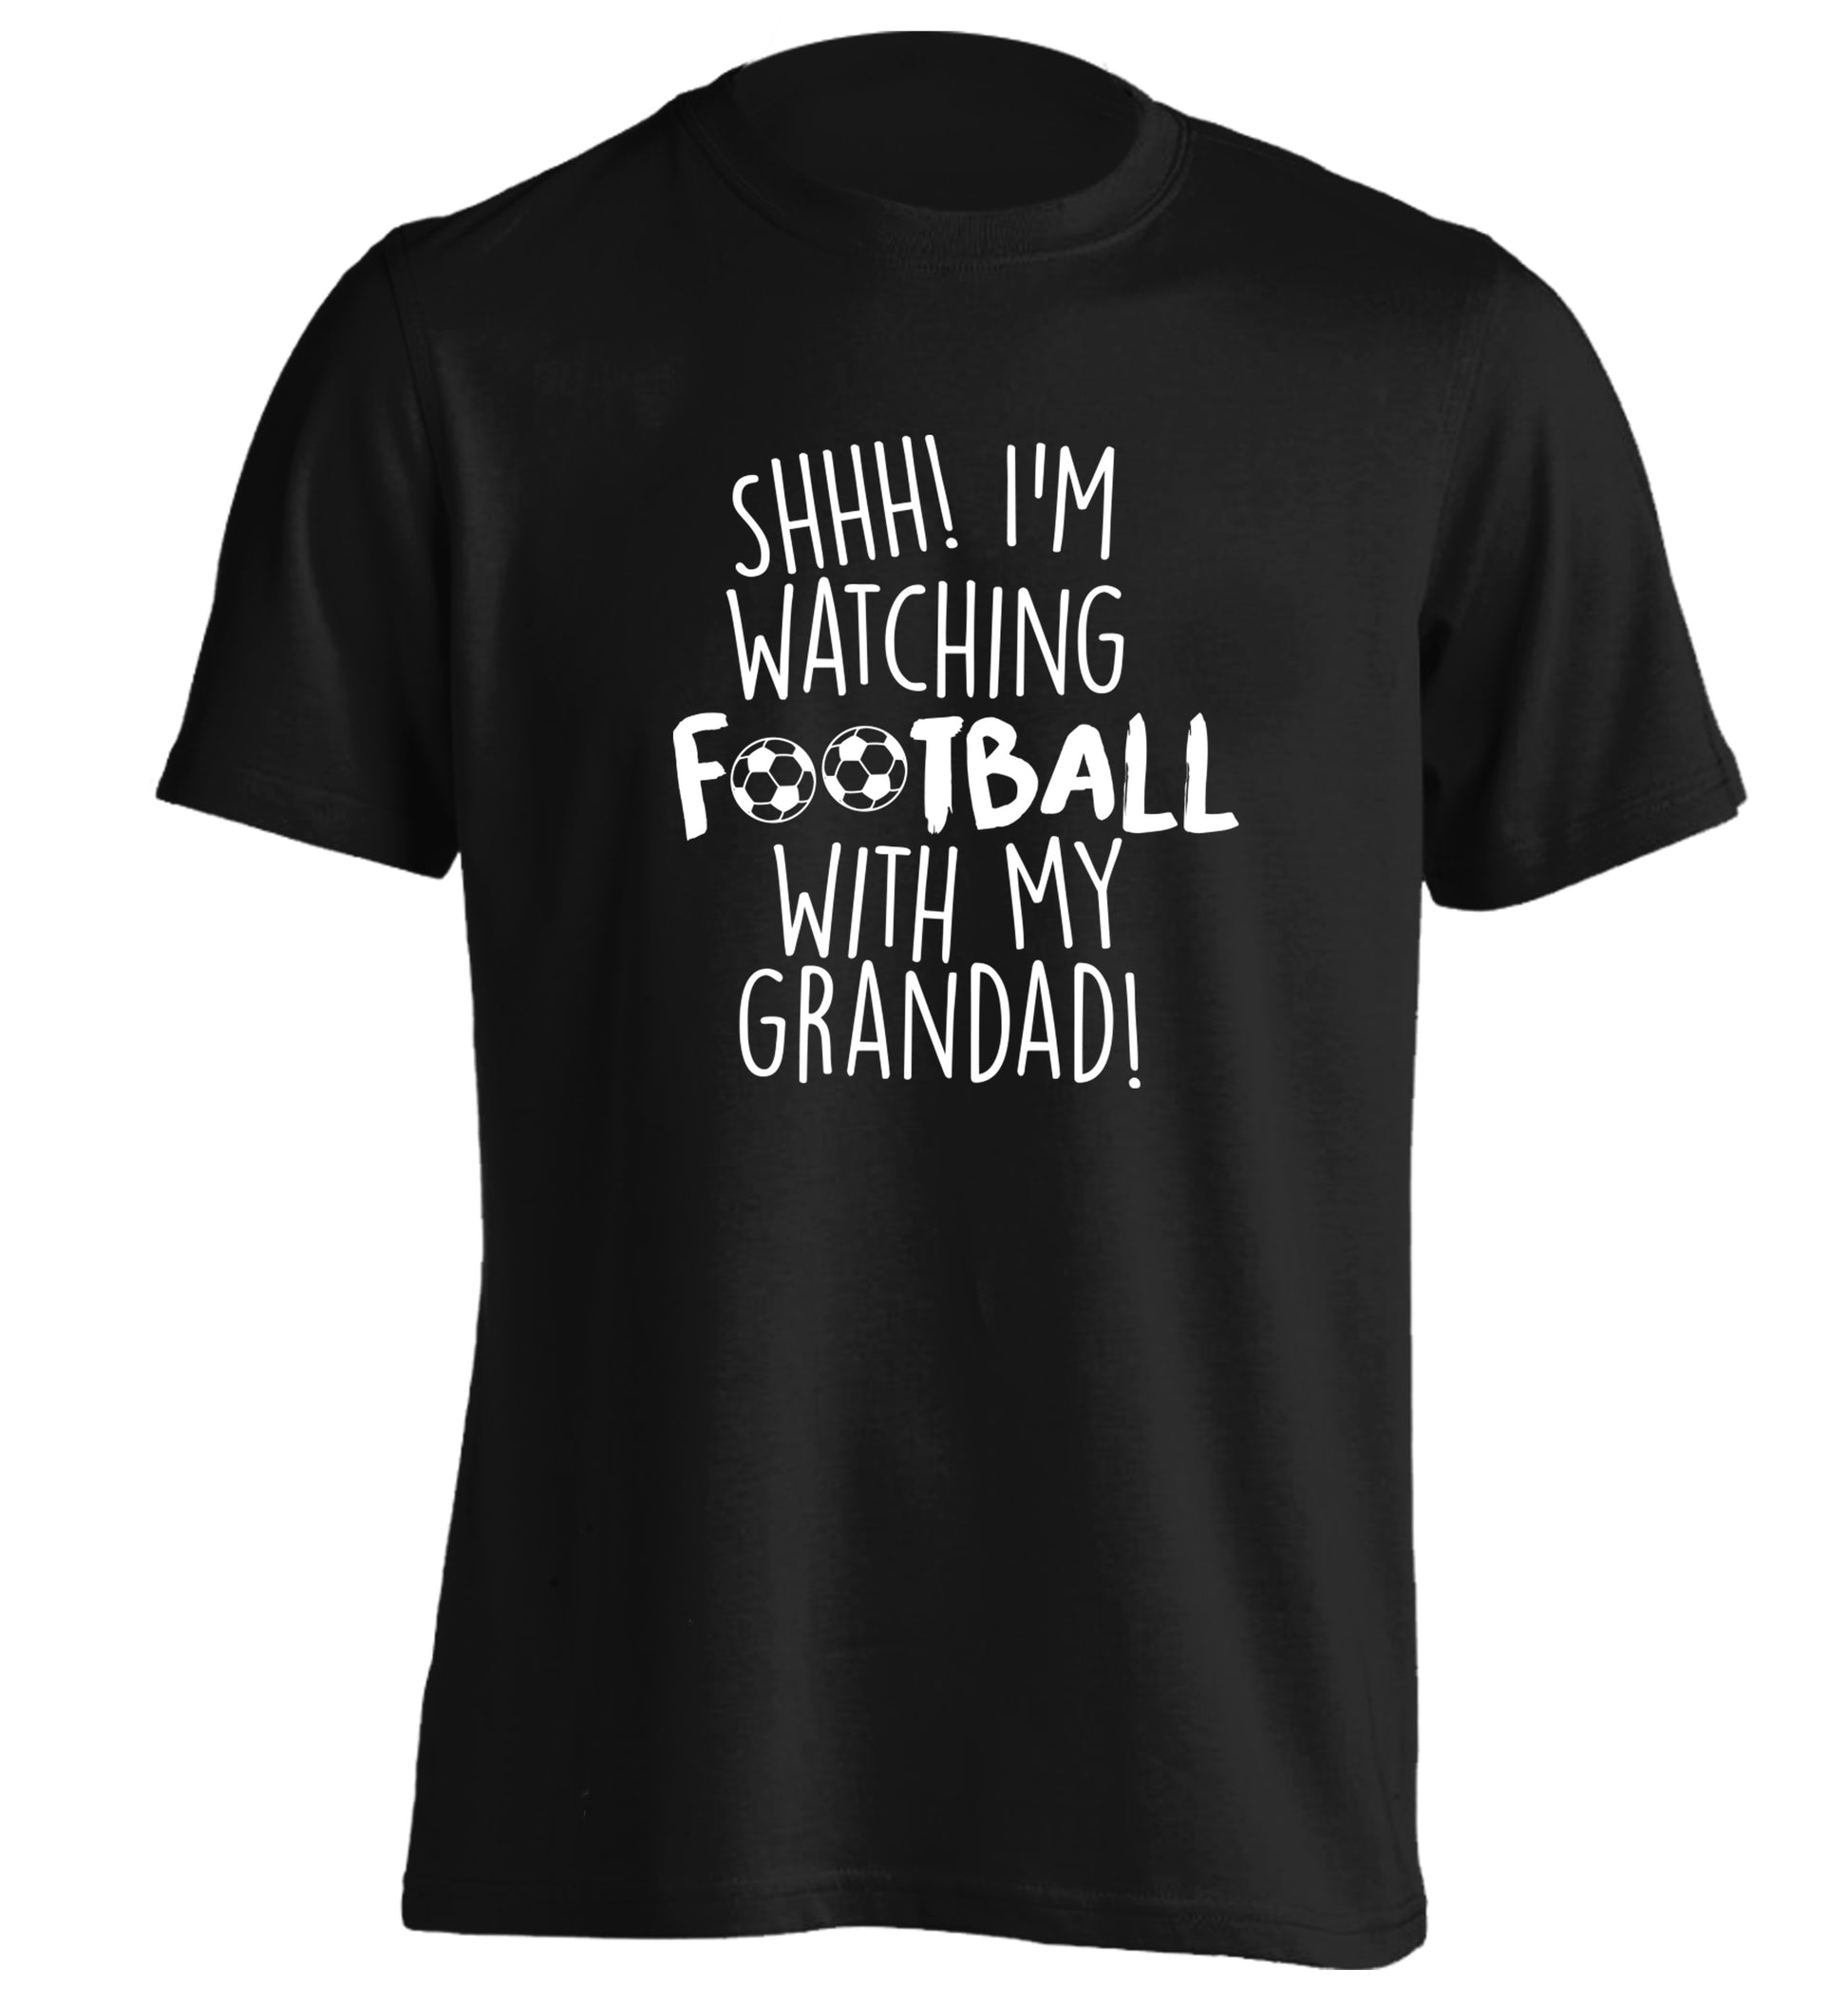 Shhh I'm watching football with my grandad adults unisexblack Tshirt 2XL